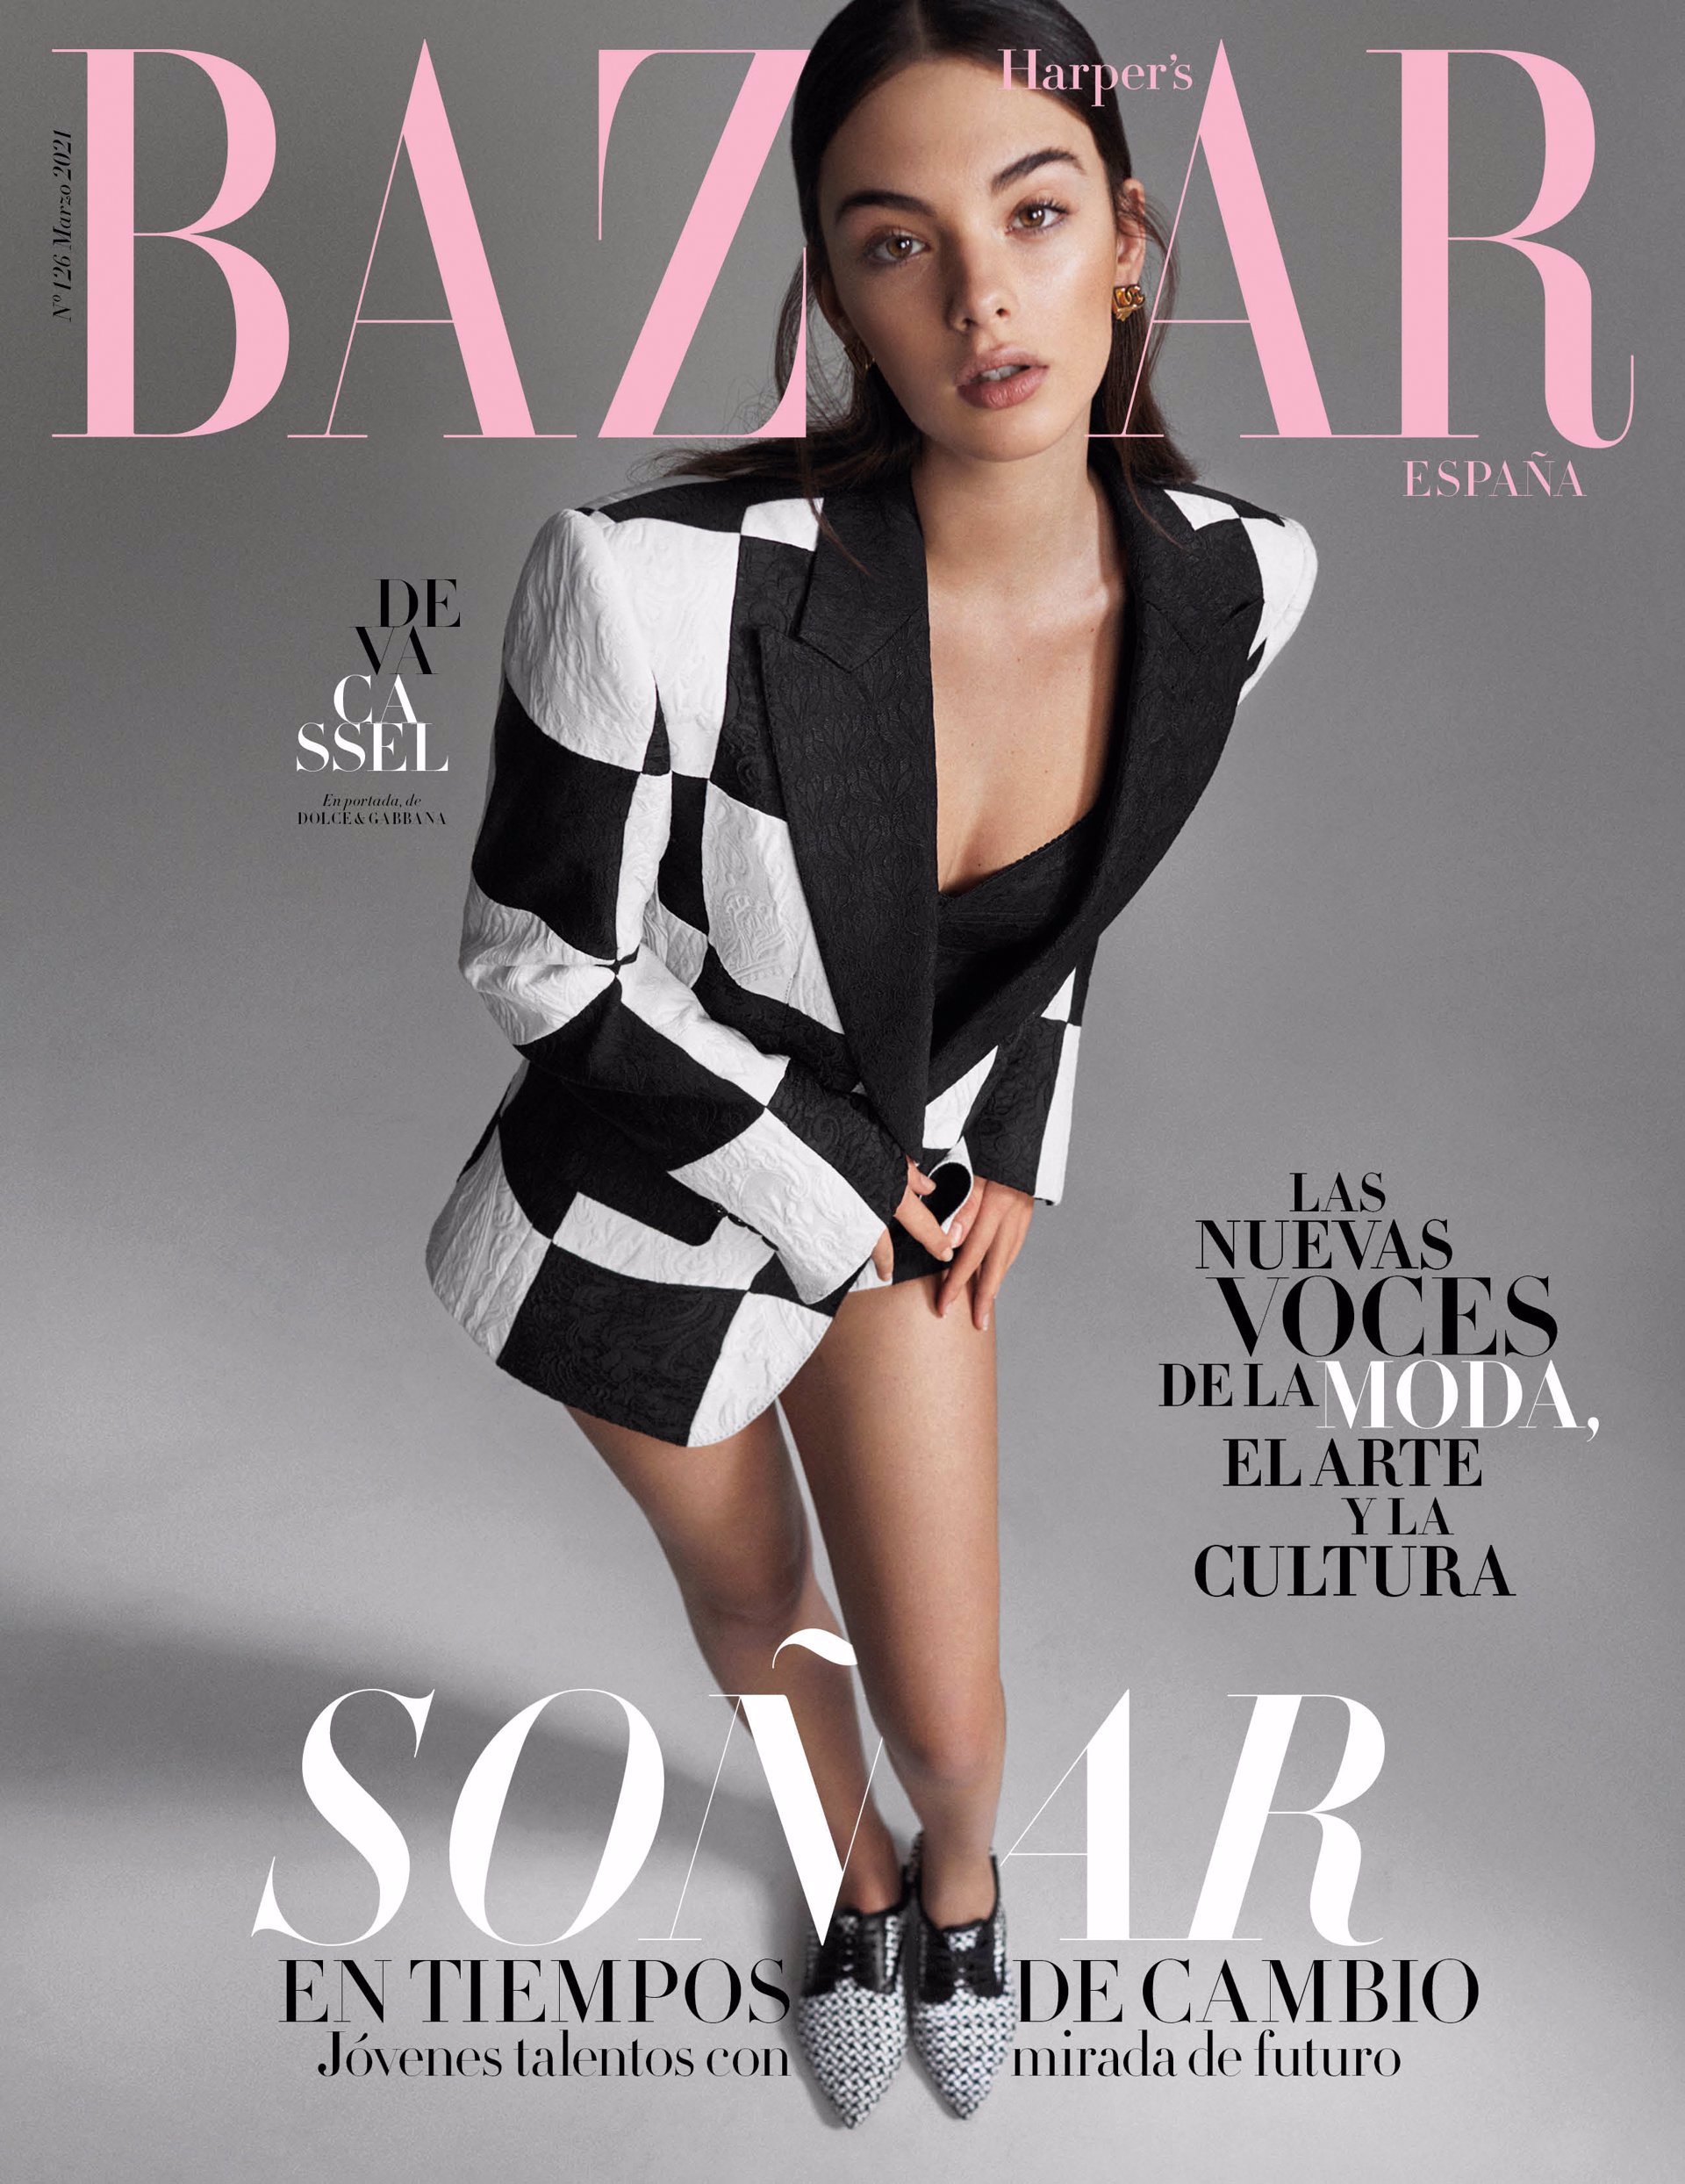 Deva Cassel protagoniza la portada de Harpeer's Bazaar